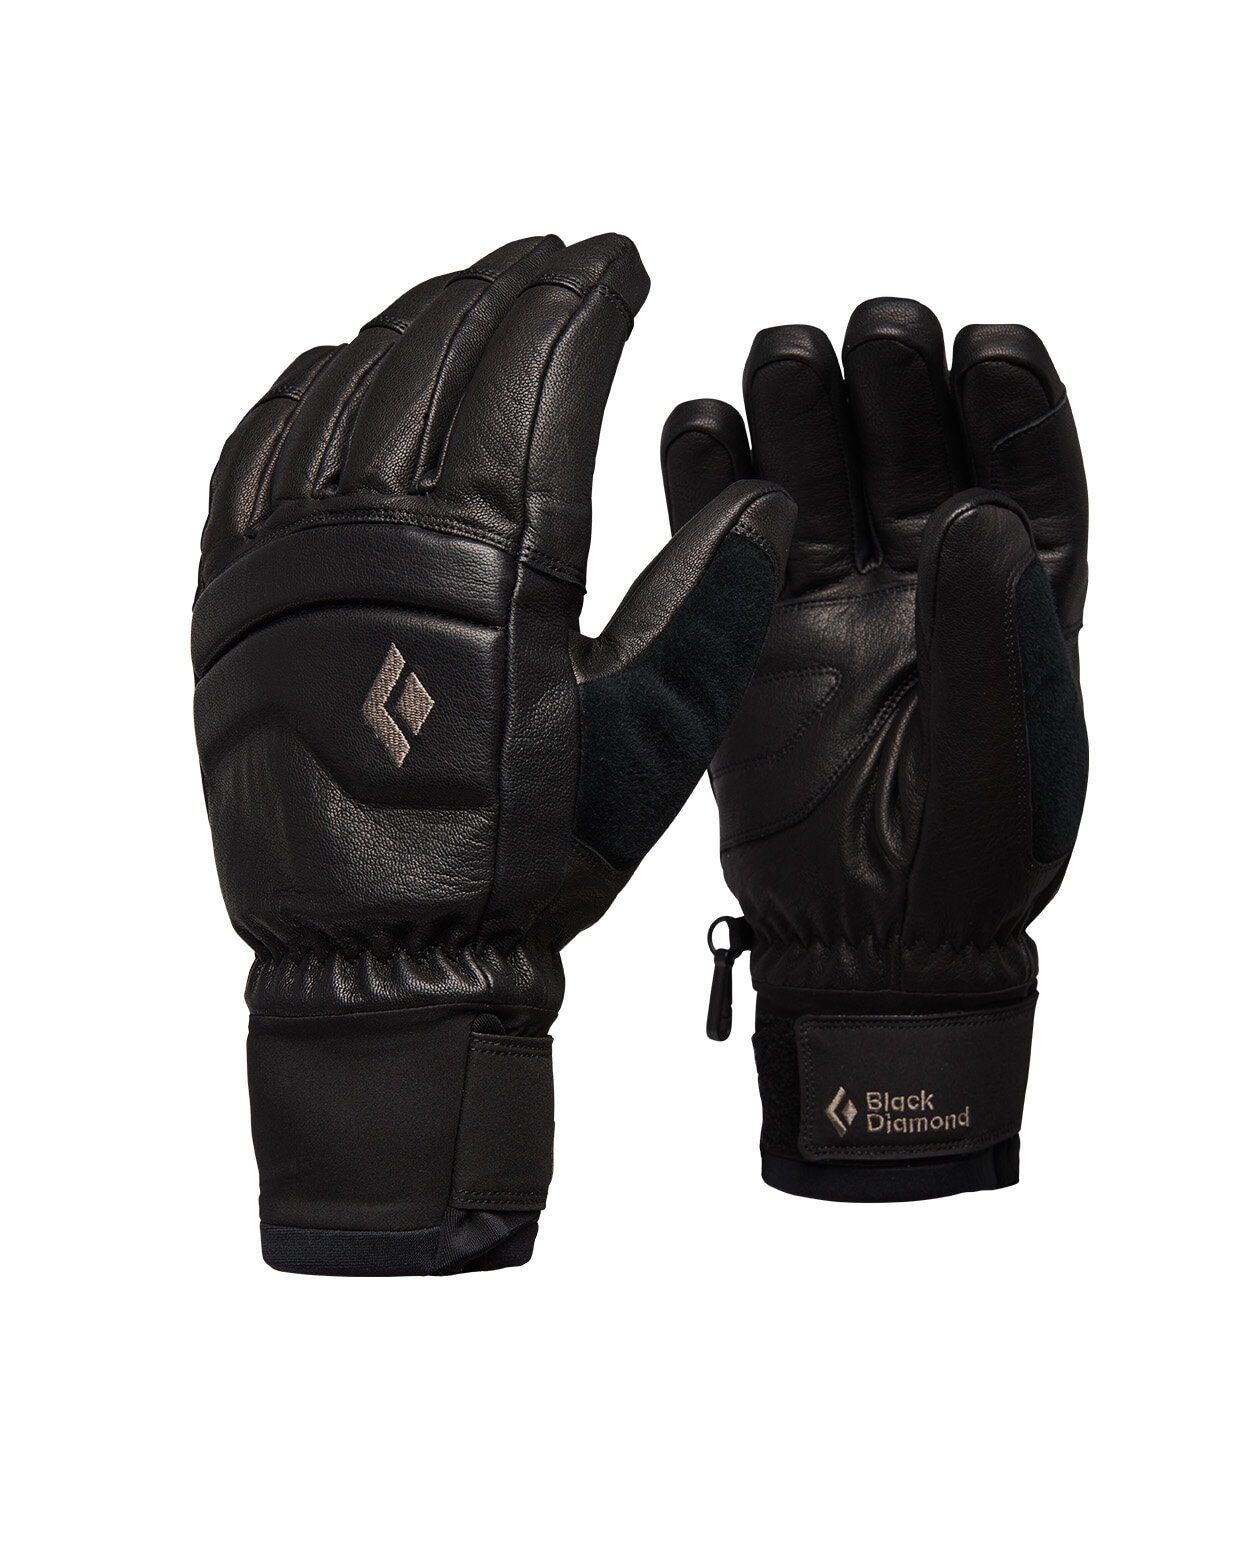 Black Diamond Spark Gloves Black Black